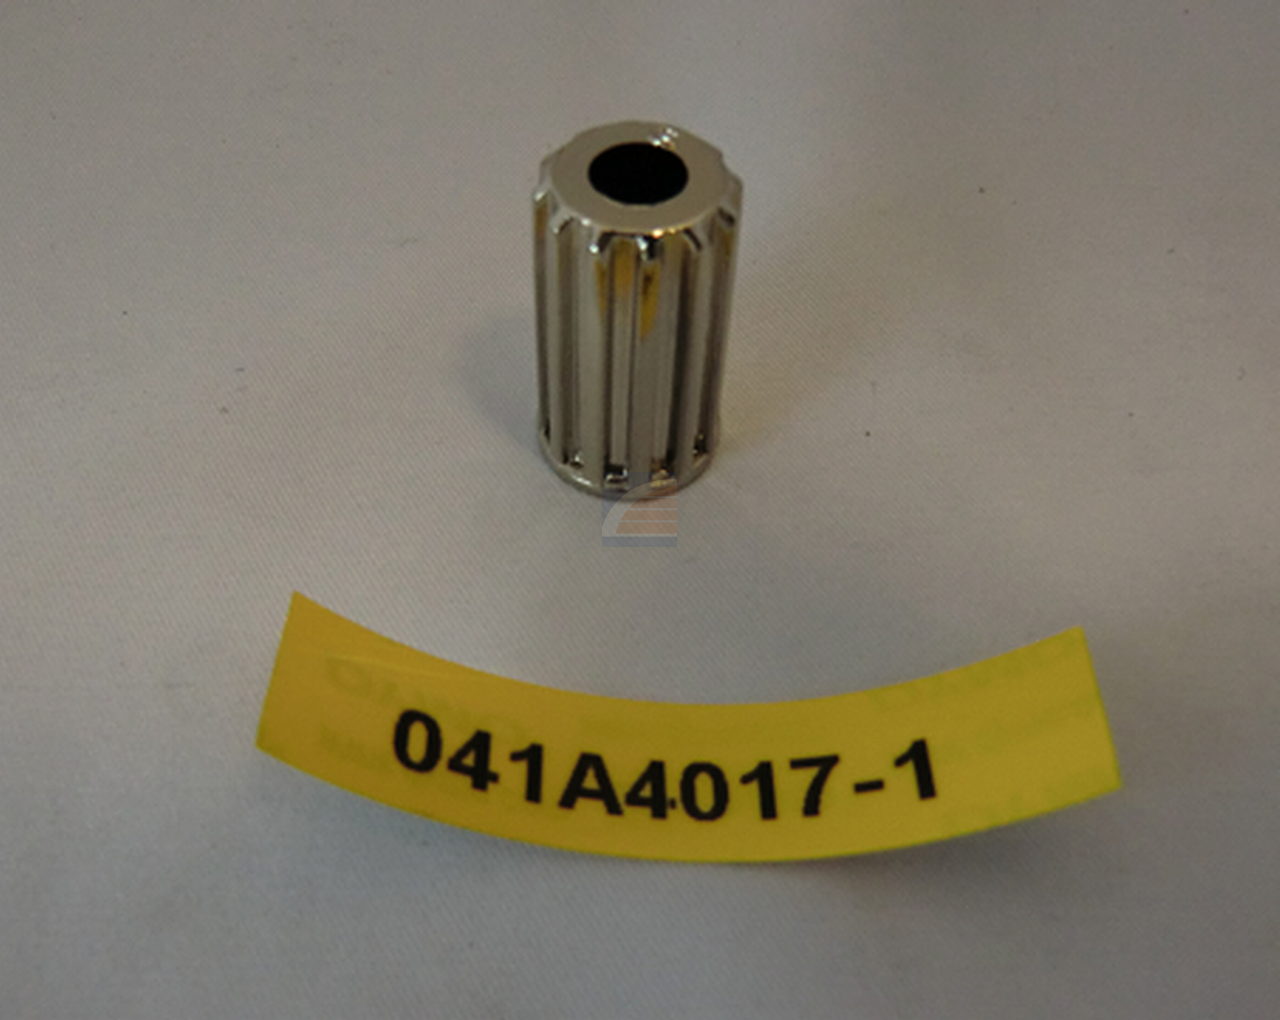 Connector Adapter SPLINE Metall - 041A4017-1